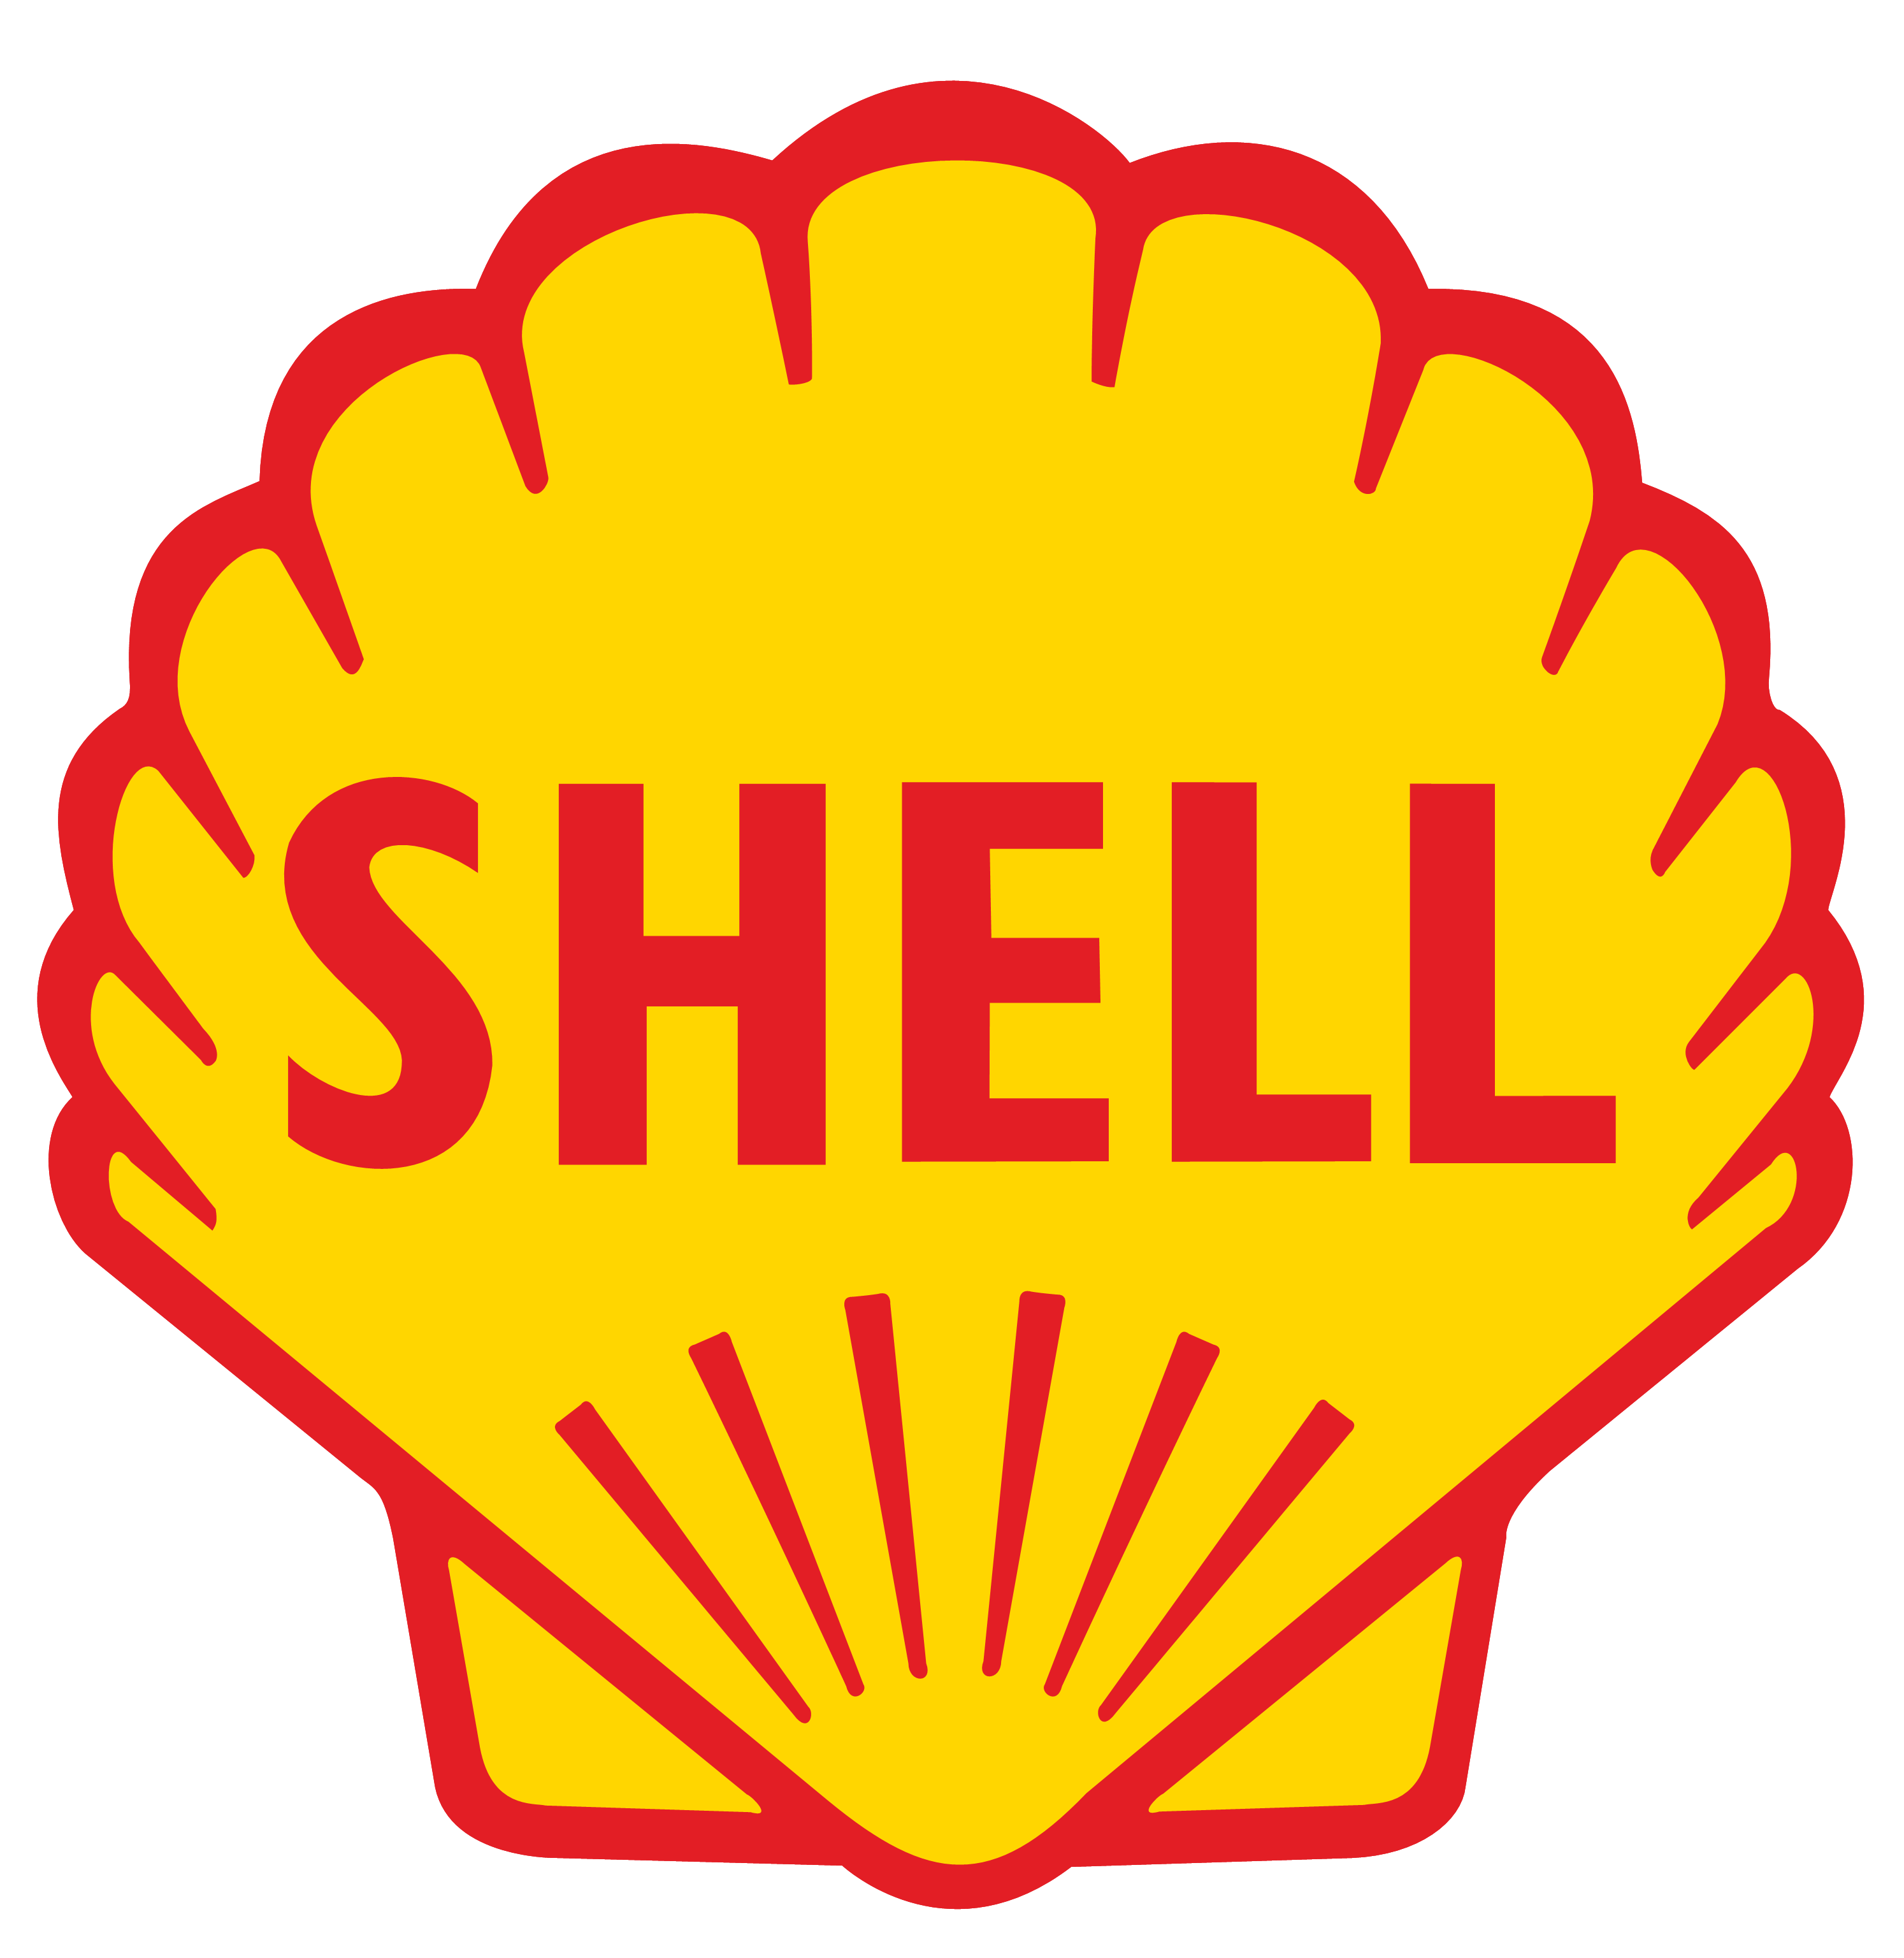 HD snail, Snails, Shell, Moll